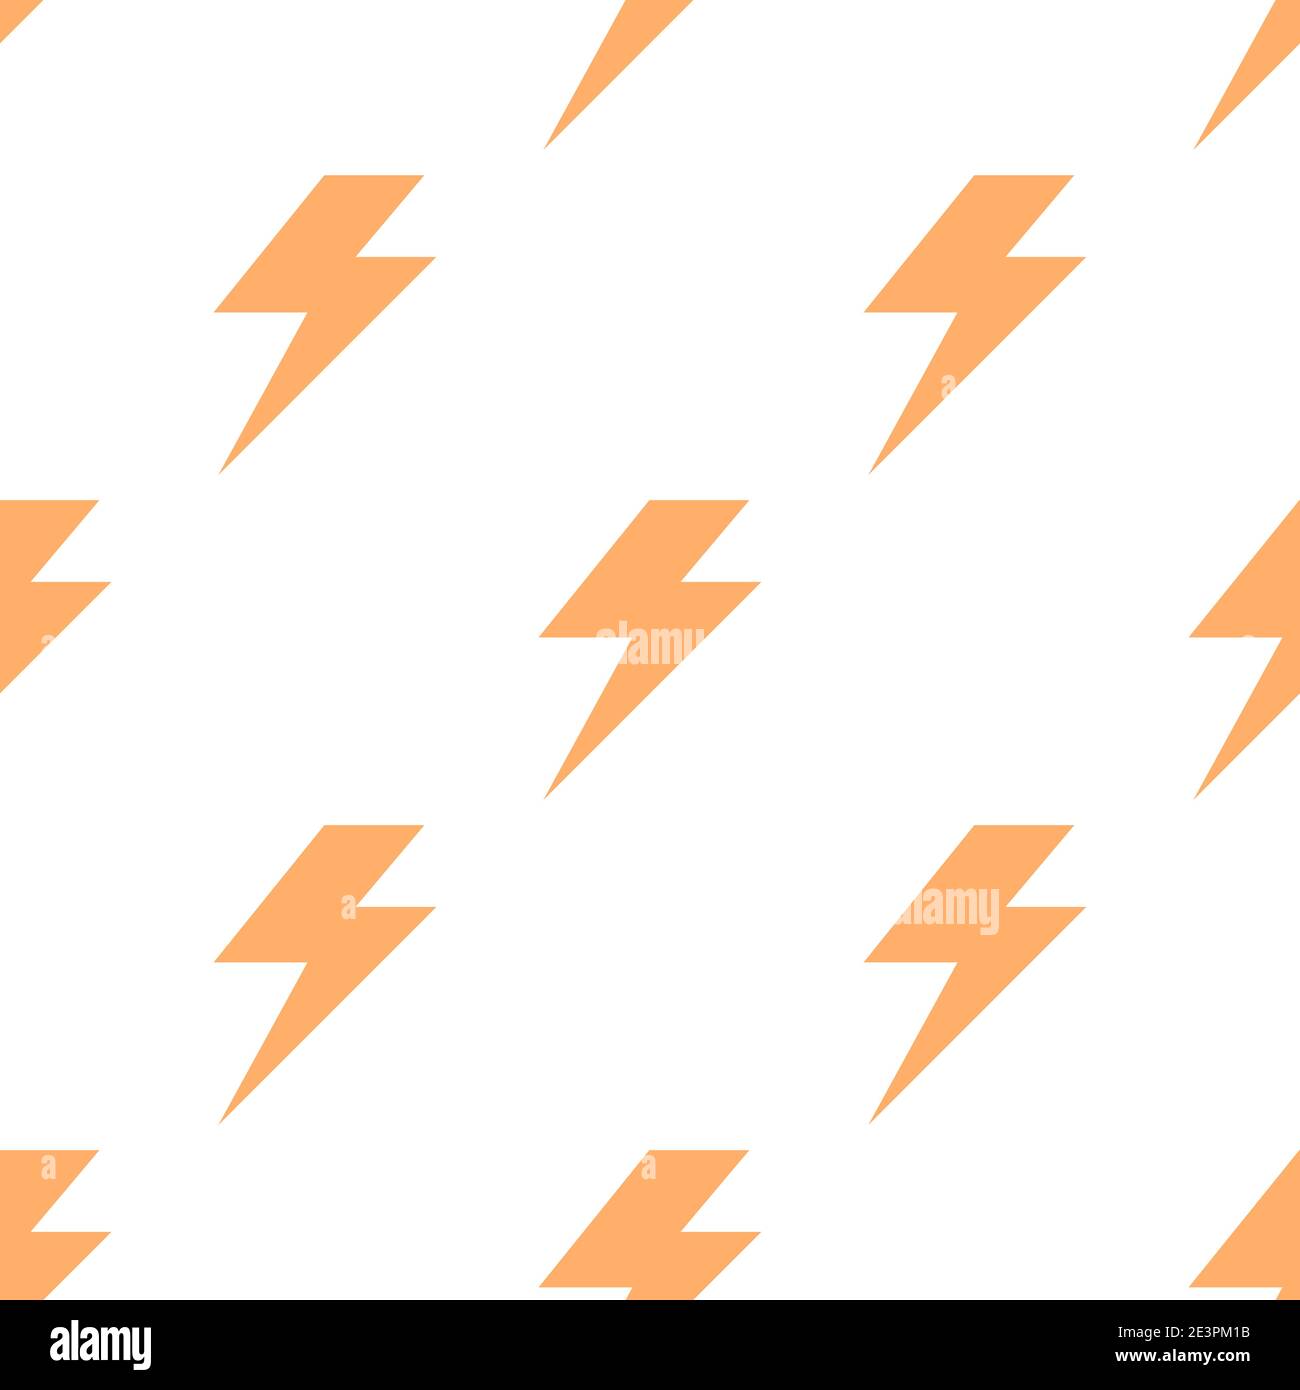 Lightning bolt flash seamless pattern. Thunderbolt print background Stock Image Art - Alamy